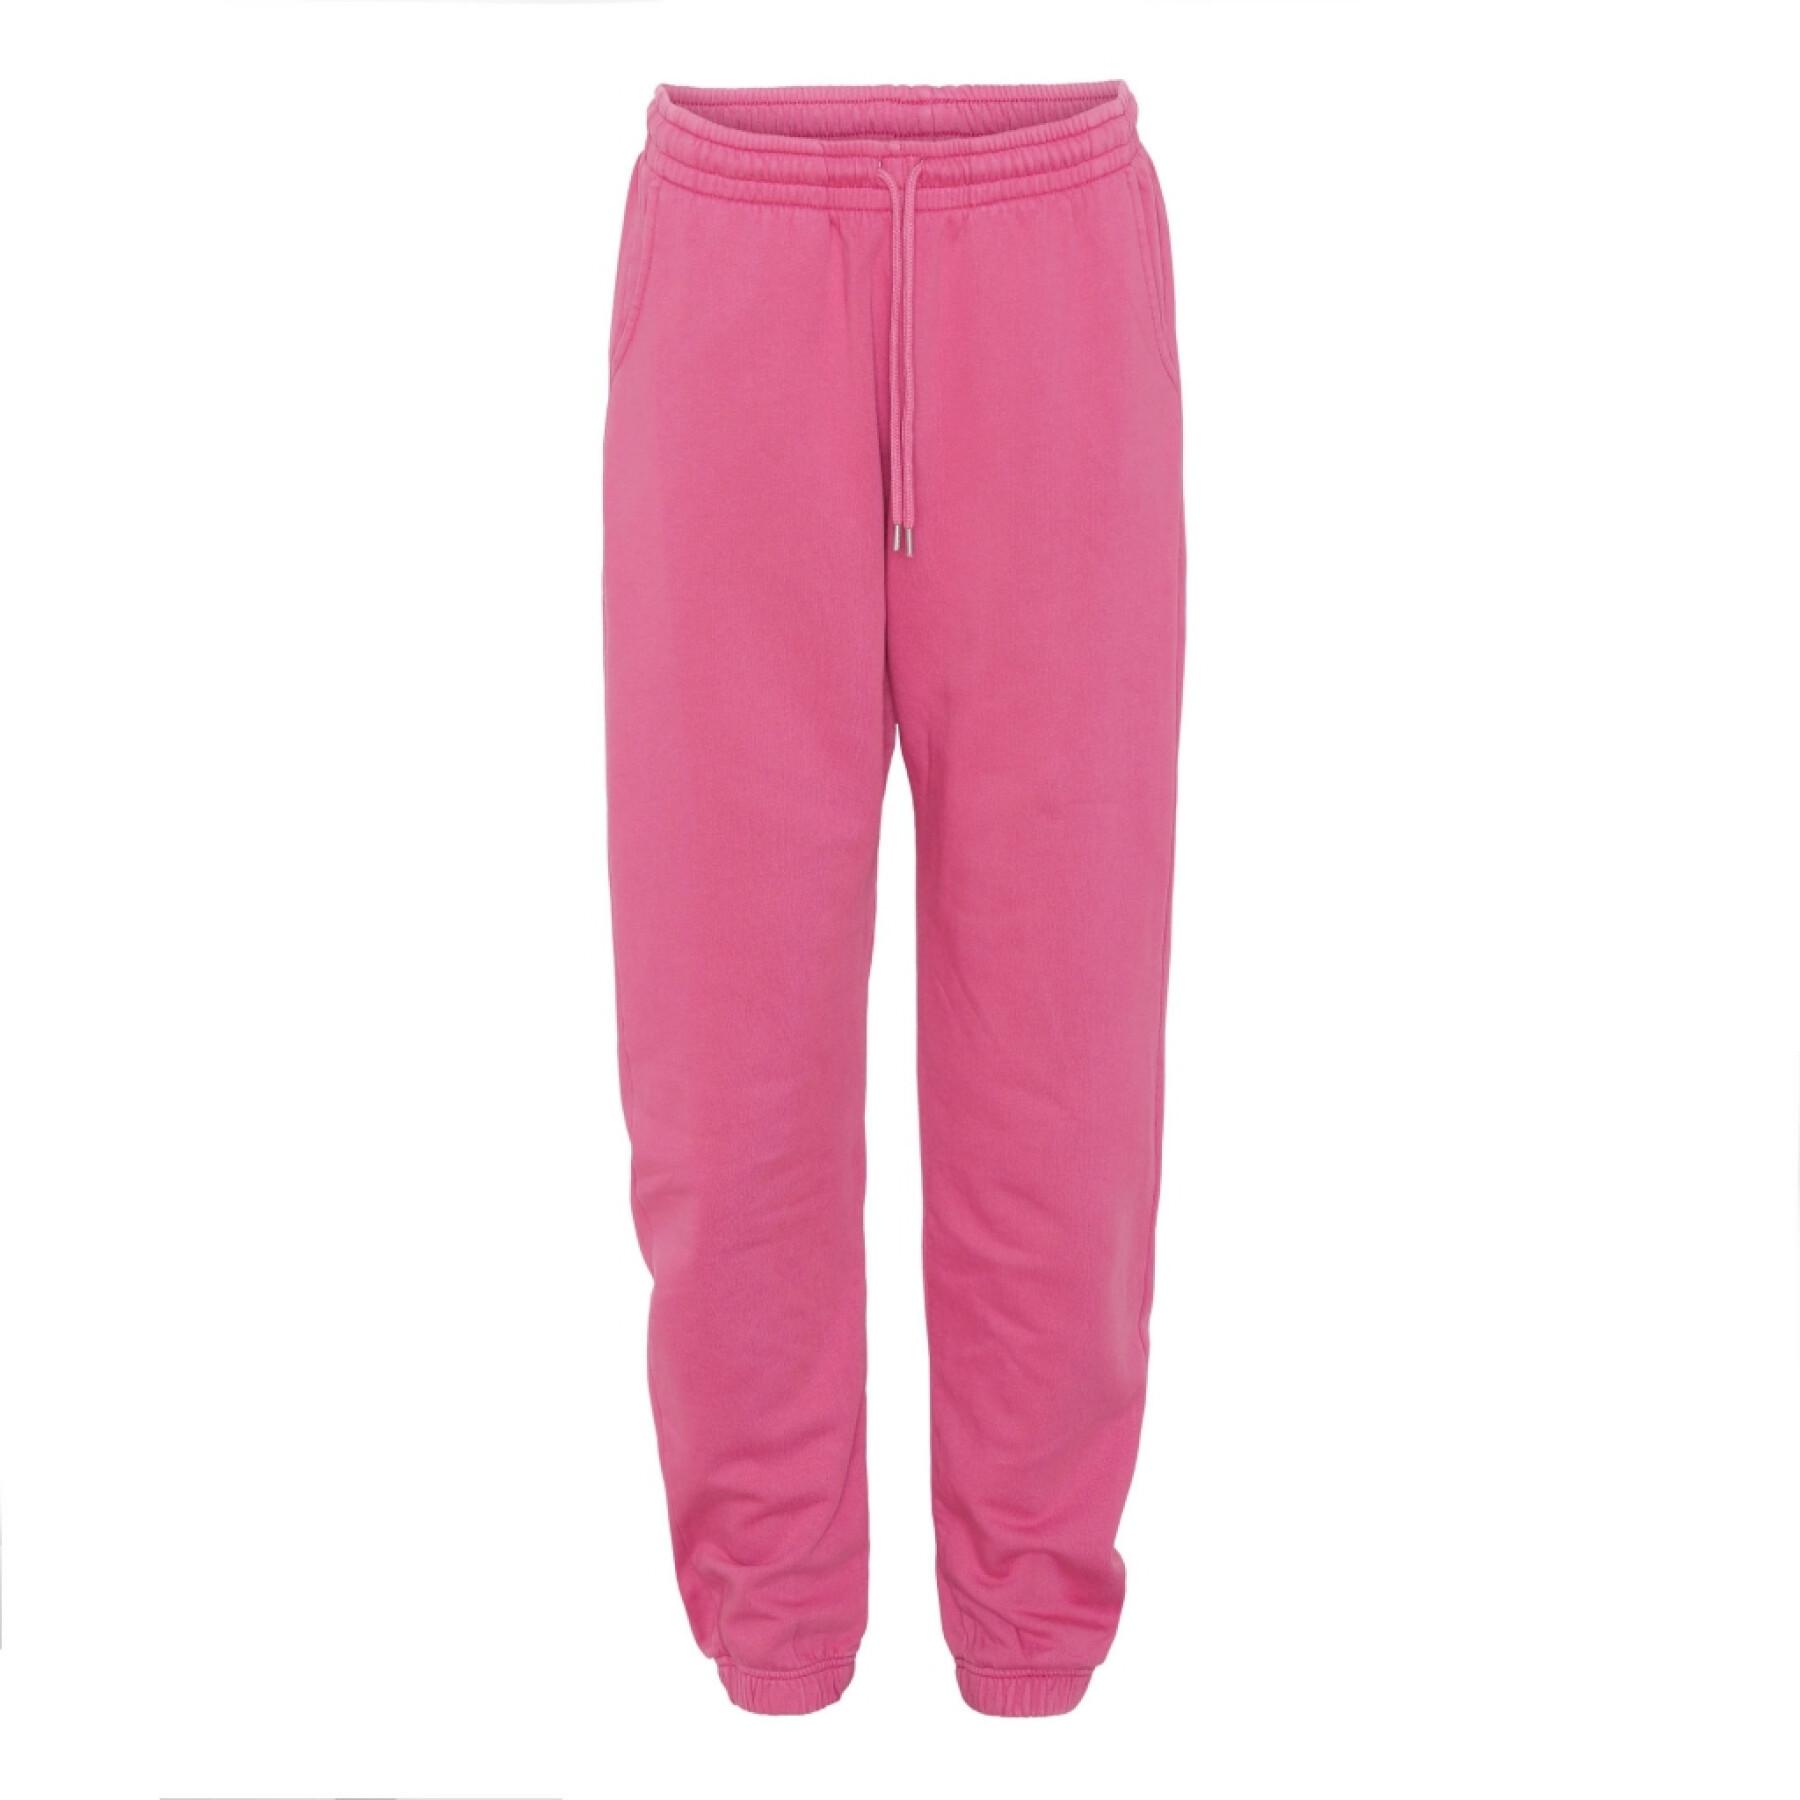 Pantalón de jogging Colorful Standard rosa chicle